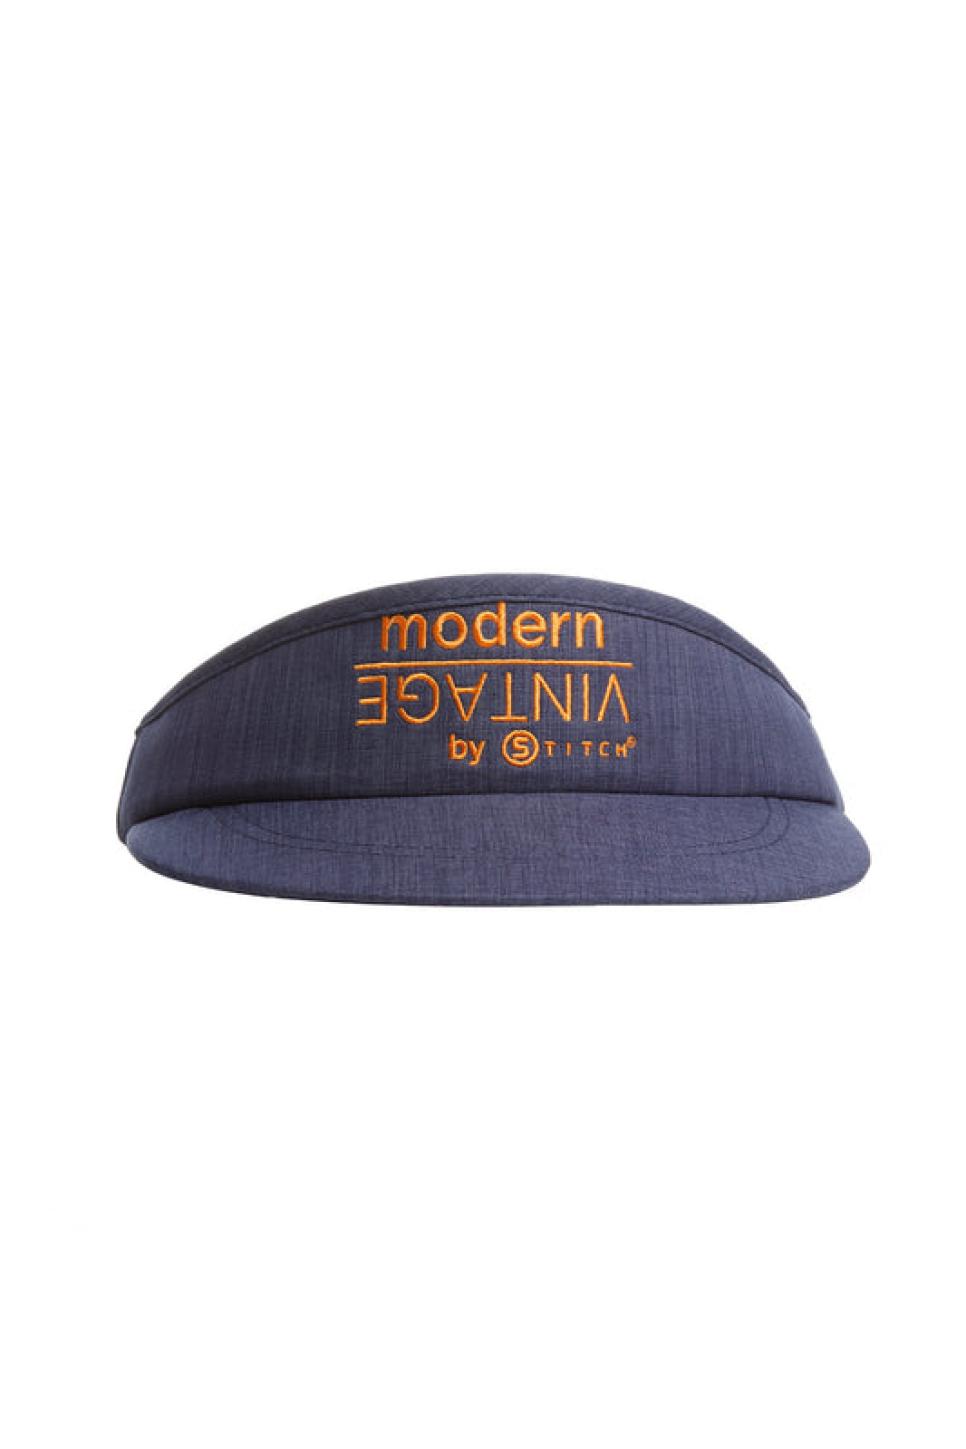 rx-stitchgolfstitch-golf-mens-modern-vintage-visor.jpeg